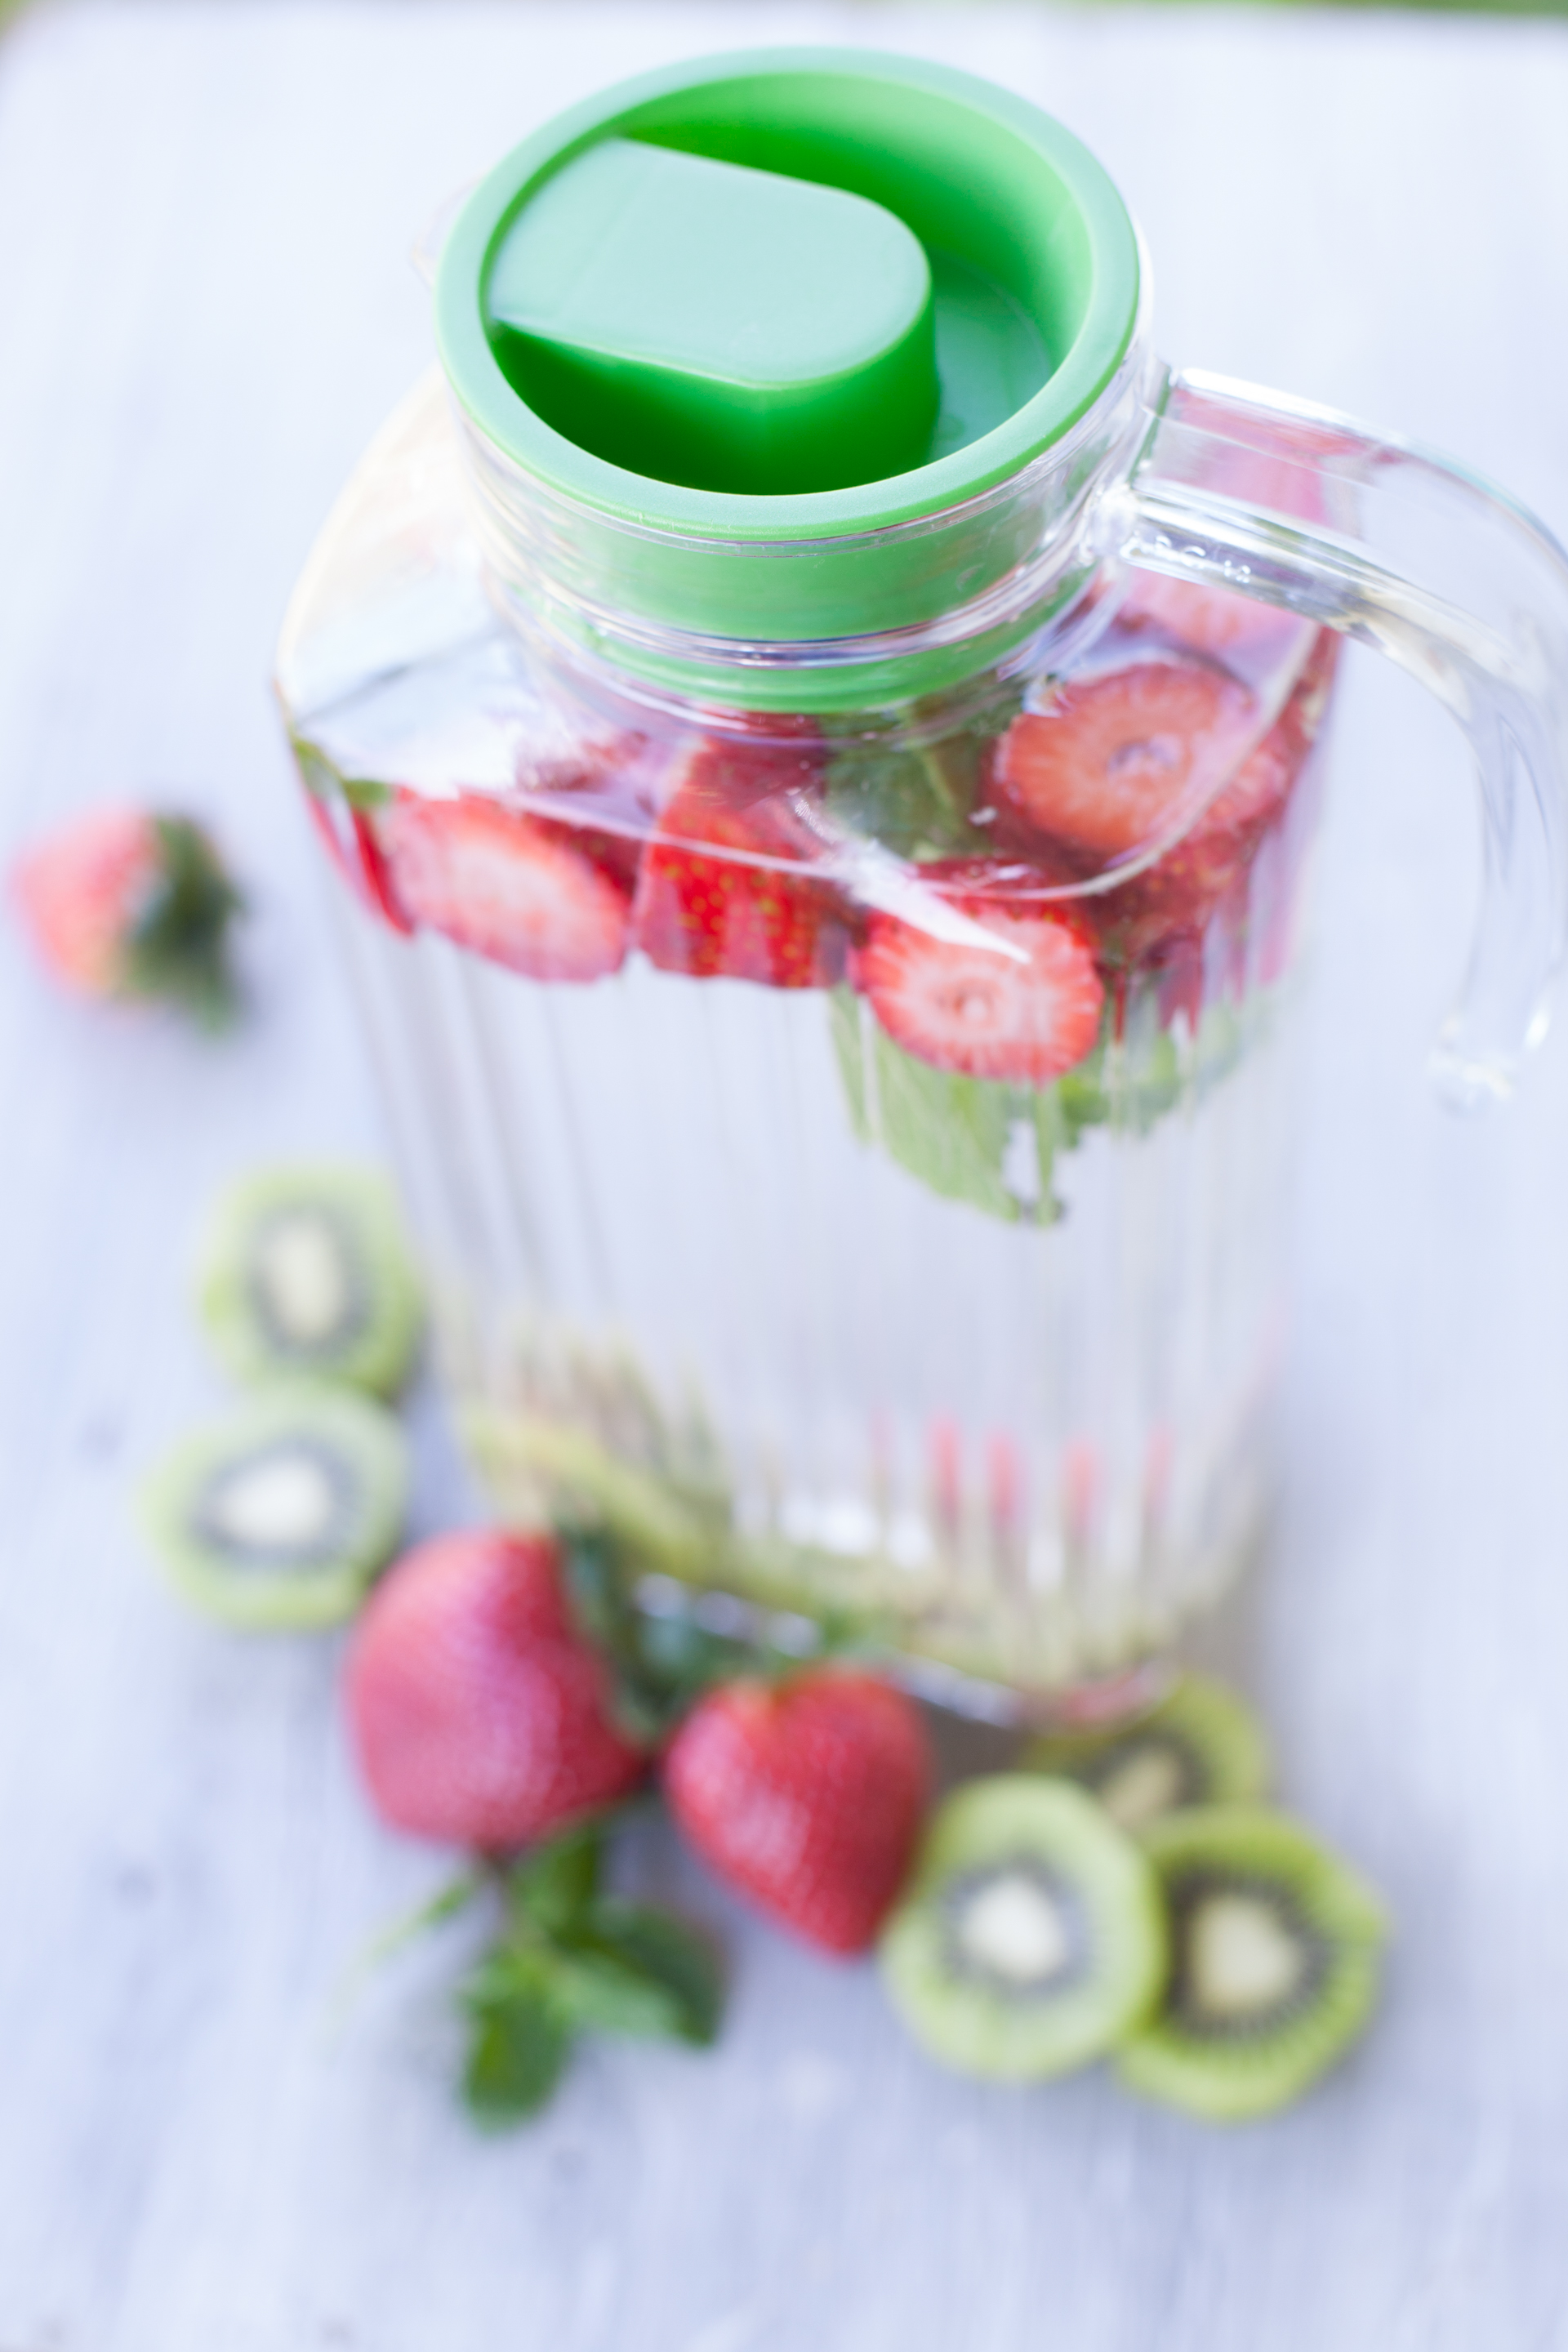 https://eatingrichly.com/wp-content/uploads/2015/05/strawberry-kiwi-water-0993.jpg